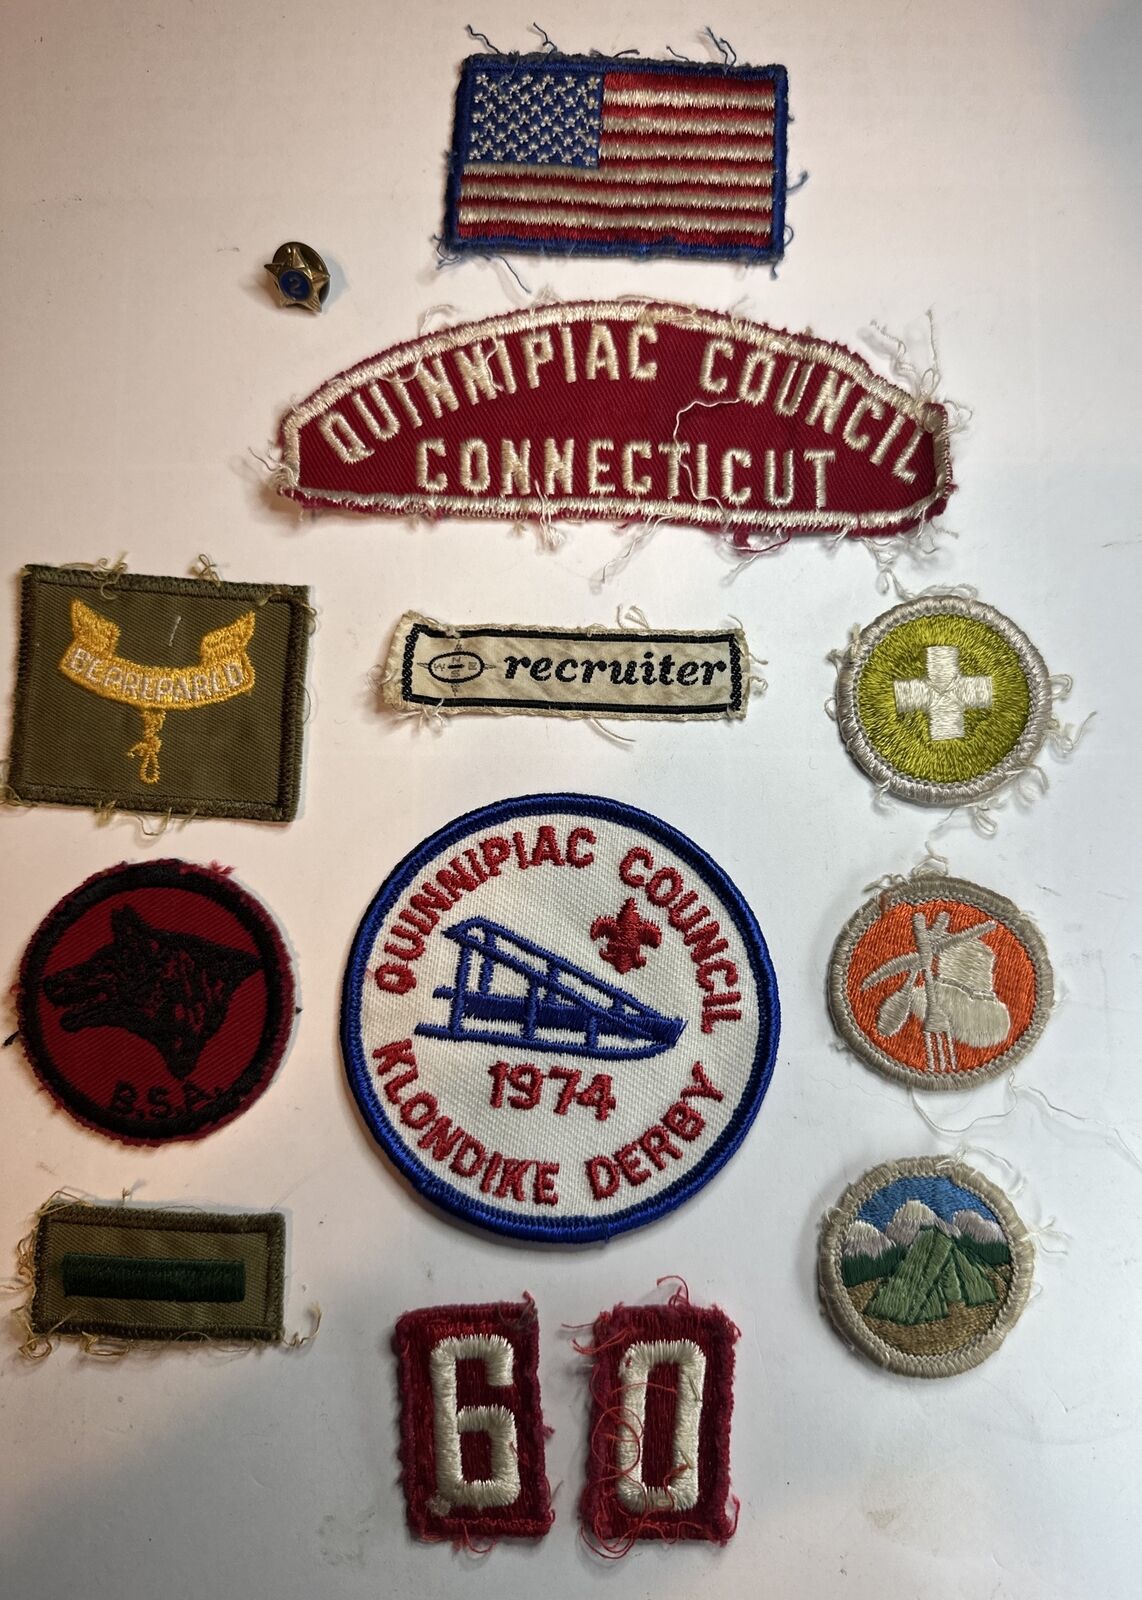 Vintage 1974 Quinnipiac Council Scout Scouting Pin Patches Klondike Derby